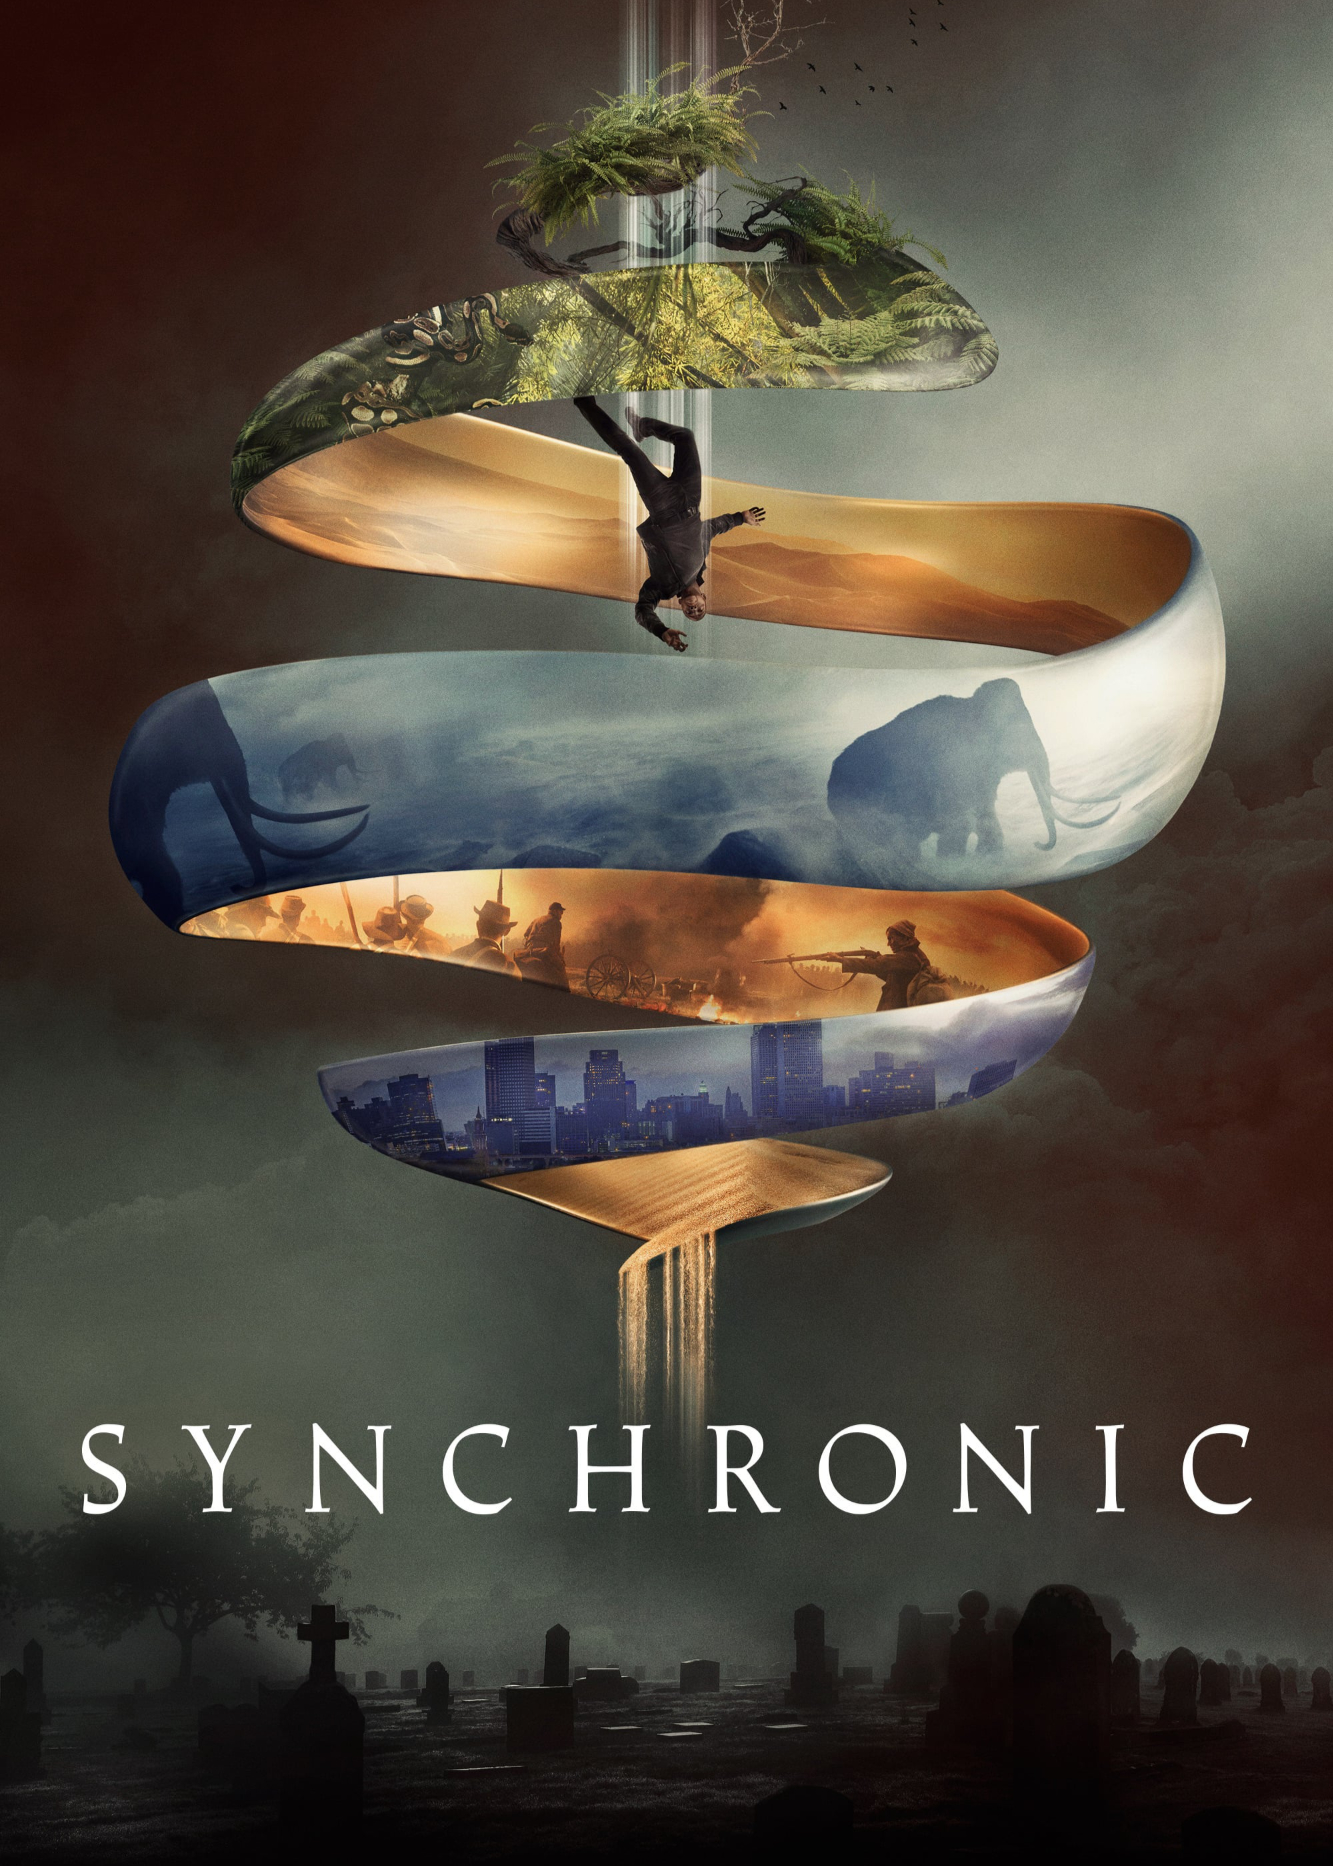 Synchronic - Synchronic